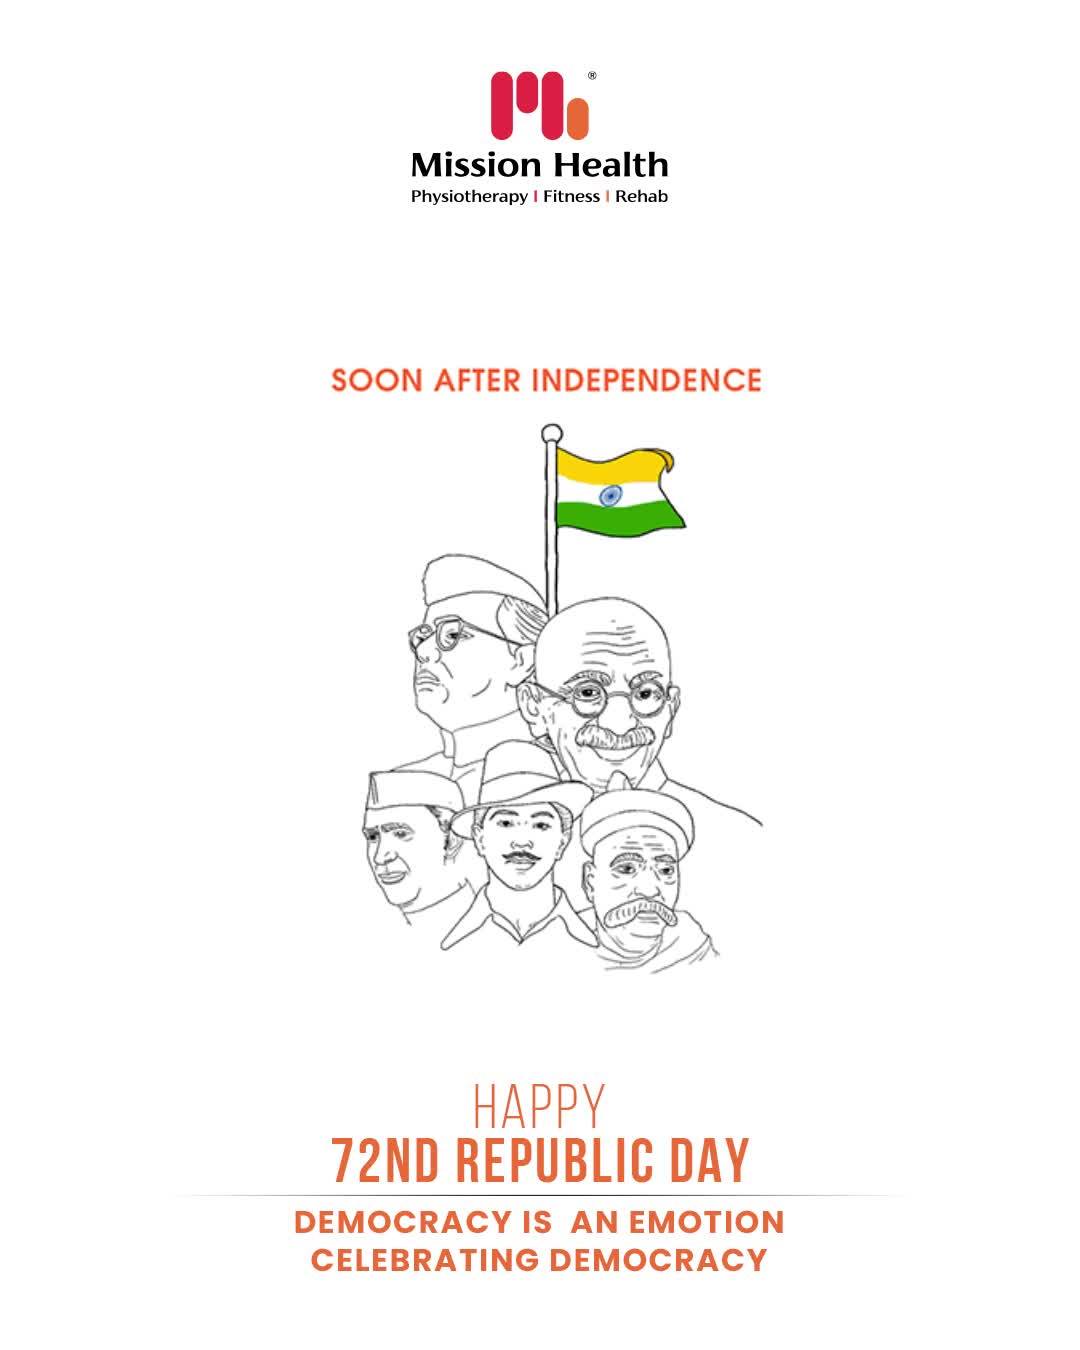 Happy Republic Day!

#HappyRepublicDay #RepublicDayIndia #RepublicDay2021 #India #JaiHind #MissionHealth #Fitness #PersonalTraining #FatToFit #Transform #GroupFitness #Slimming #MovementIsLife